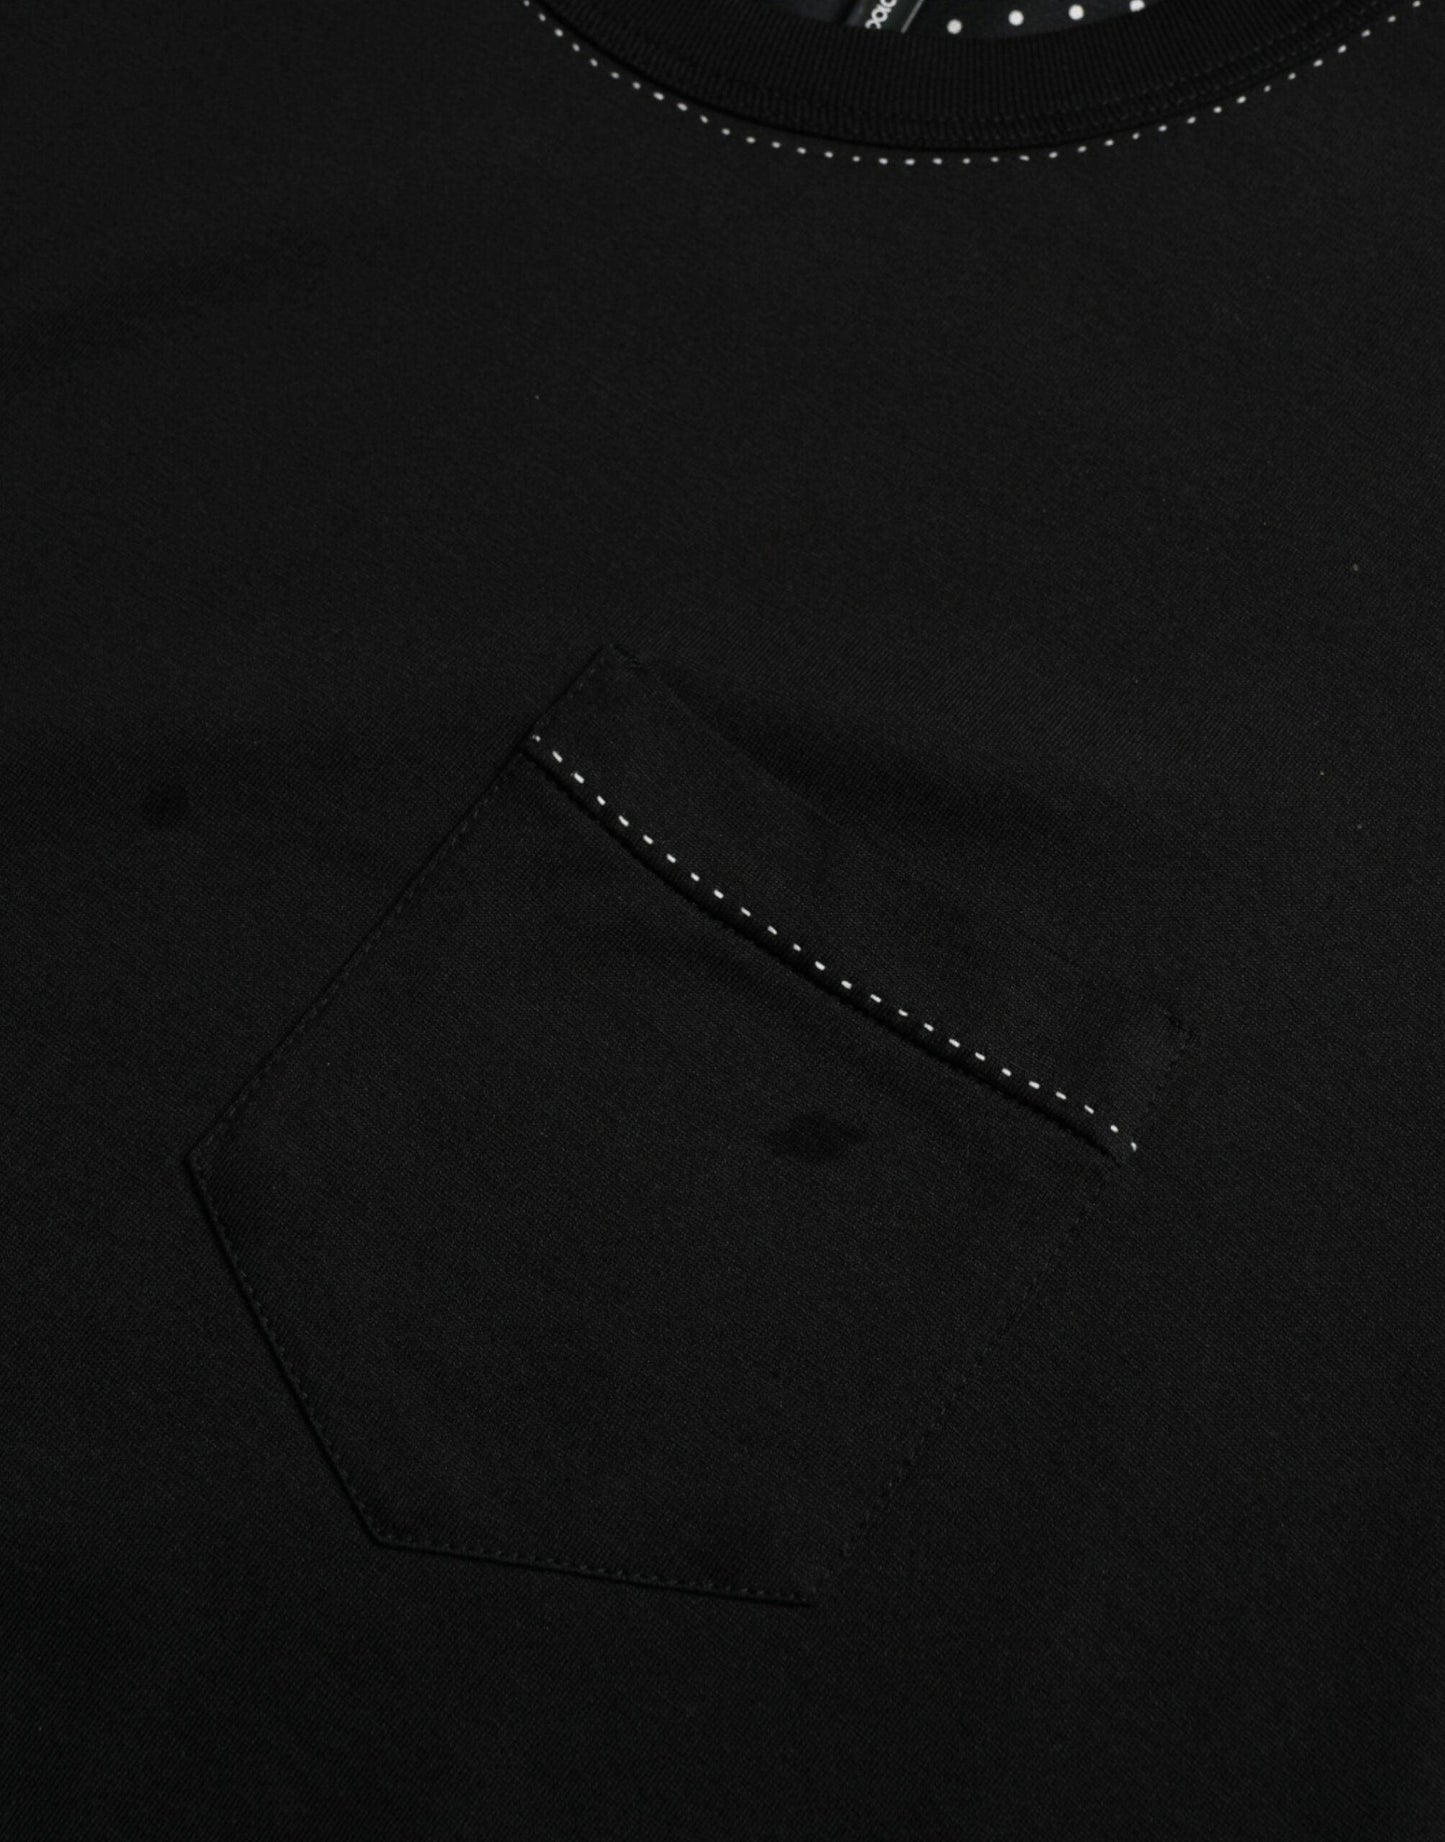 Dolce & Gabbana Black Cotton Round Neck Short Sleeve T-shirt - PER.FASHION